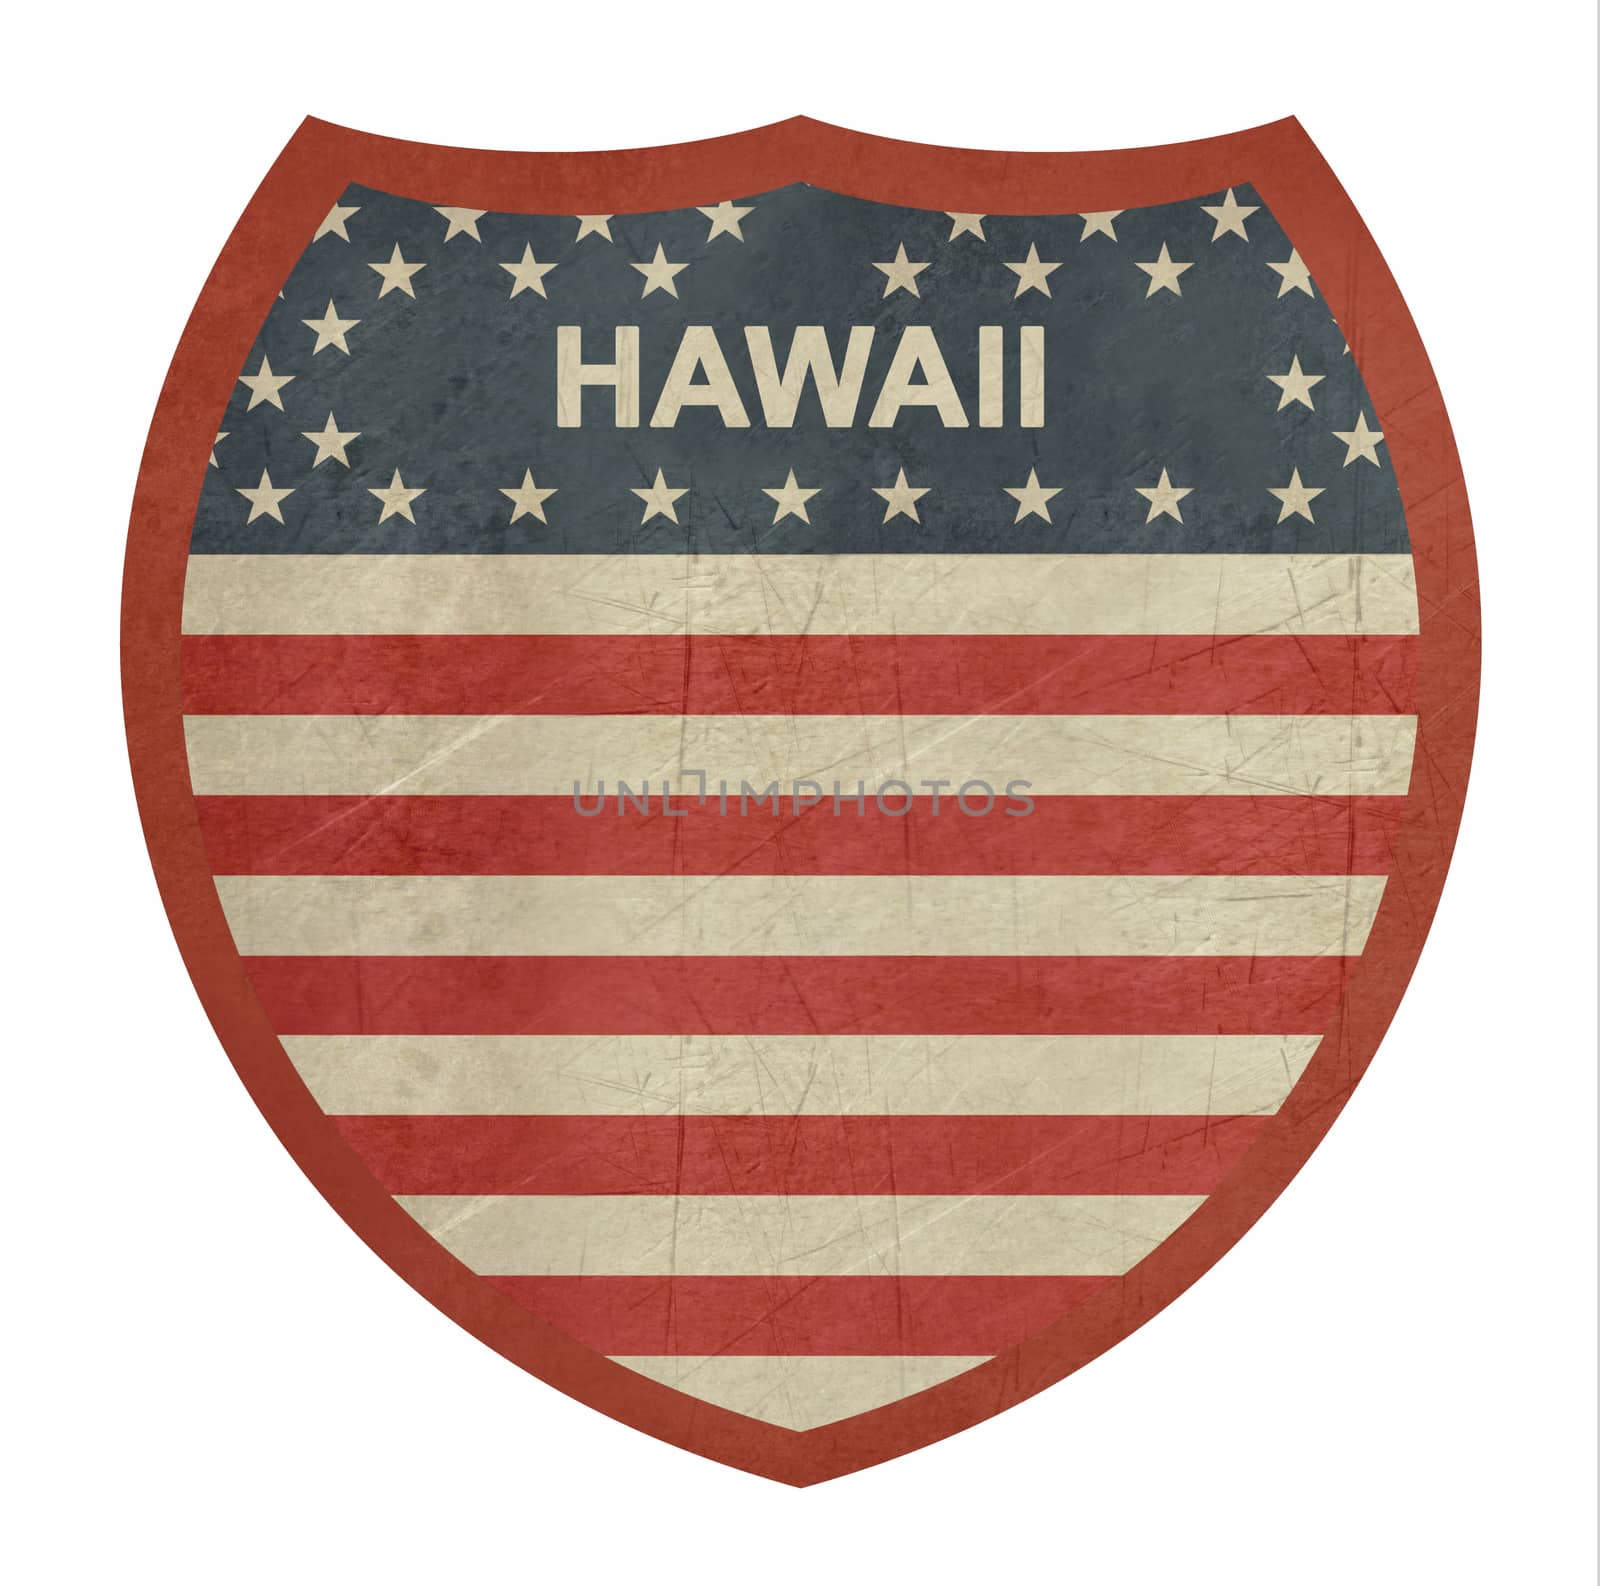 Grunge Hawaii American interstate highway sign by speedfighter